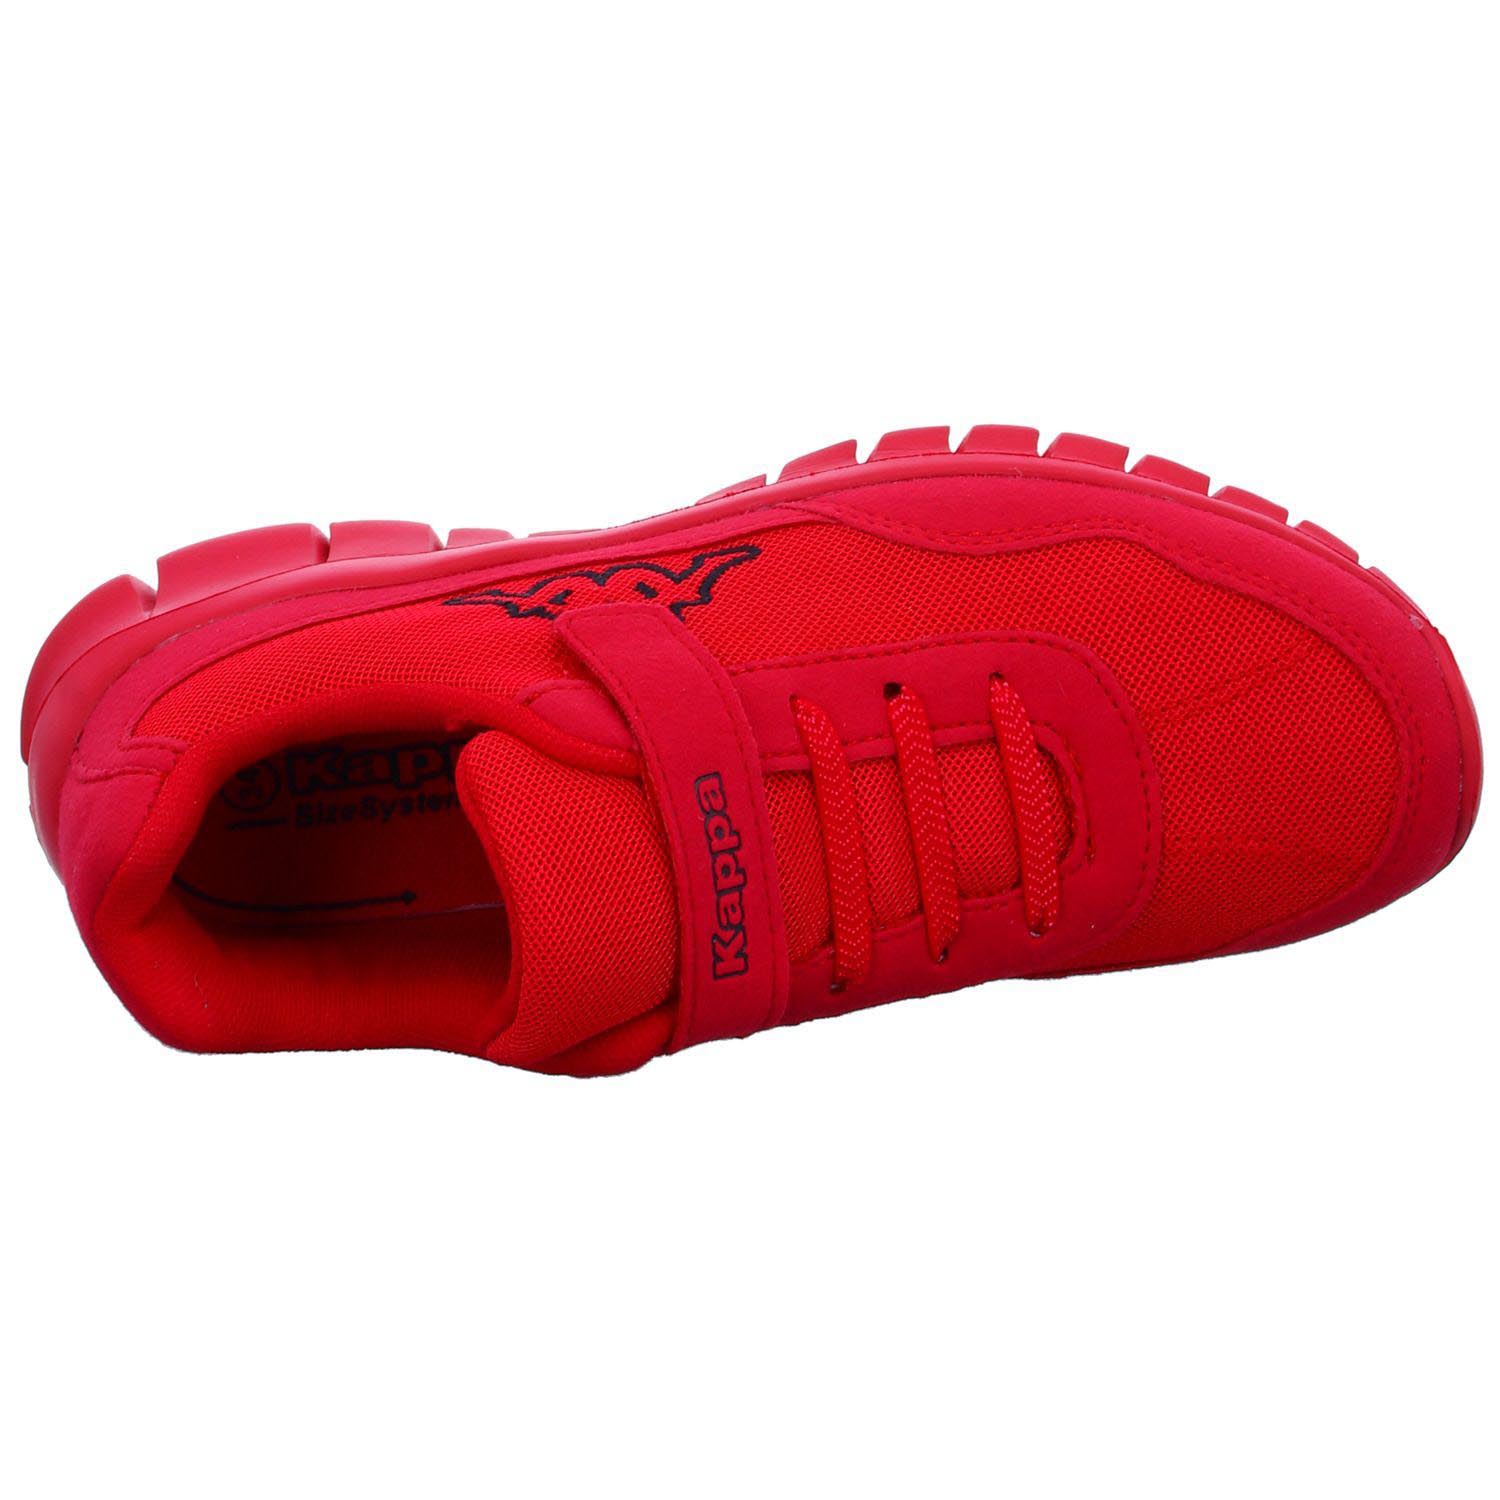 Kappa Unisex-Kinder Sneaker rot 260604K